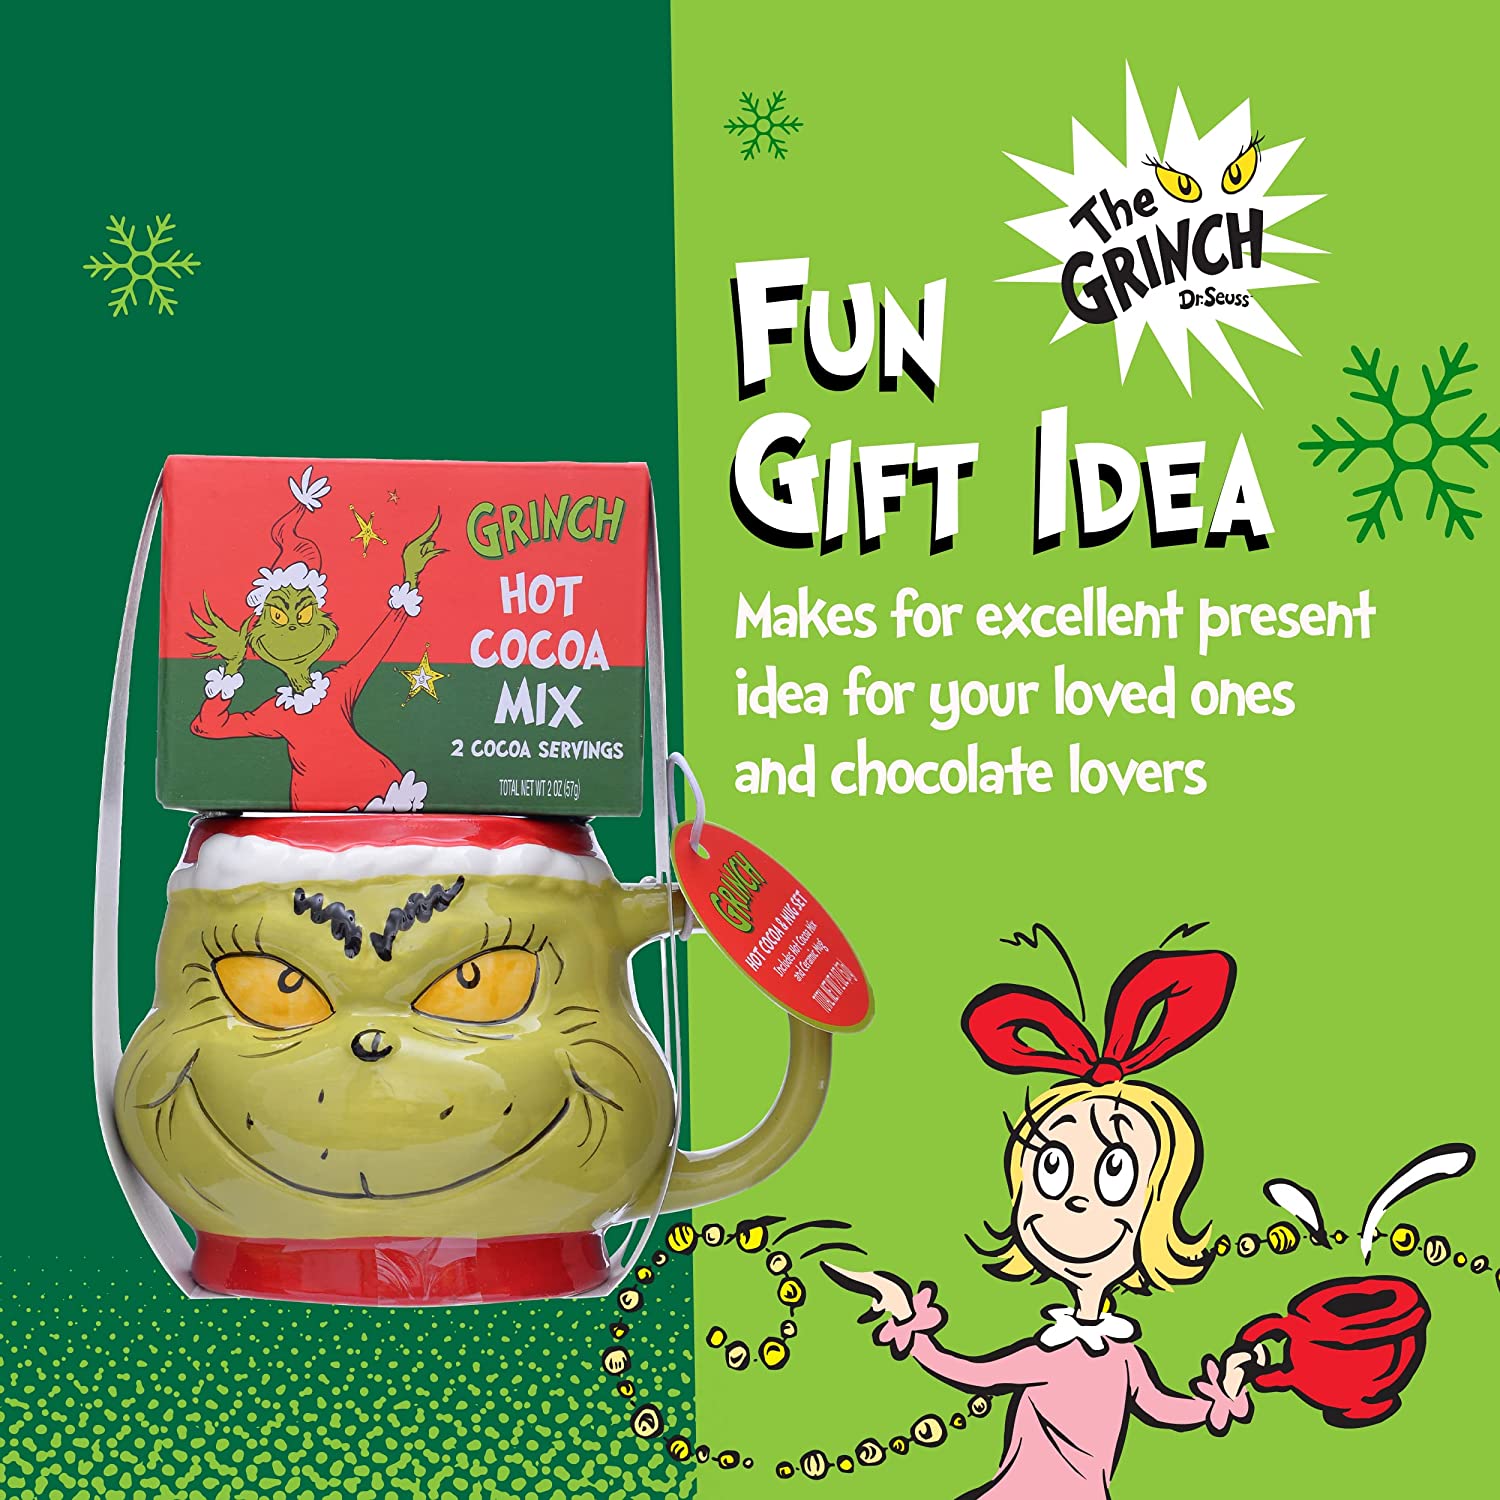 Grinch Mug, Grinch Family, Grinch Gift, Secret Santa Gift, Christmas Mugs,  Christmas Ideas for Kids, Hot Chocolate Mugs, Christmas Gifts 